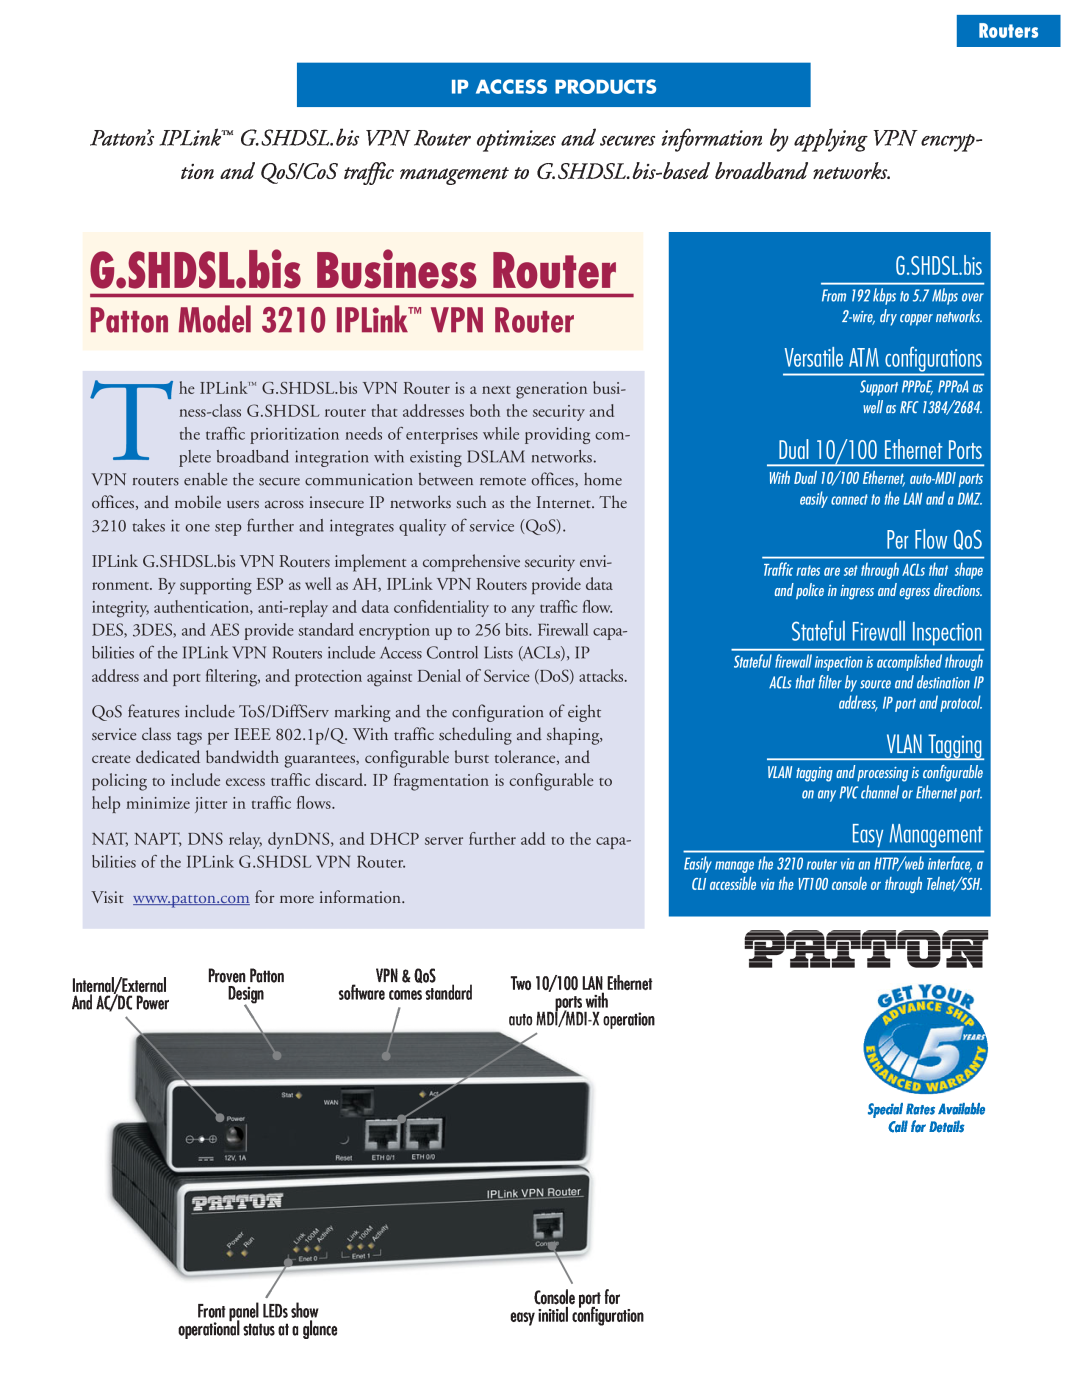 Patton electronic manual G.SHDSL.bis Business Router, Patton Model 3210 IPLink VPN Router, Per Flow QoS, VLAN Tagging 